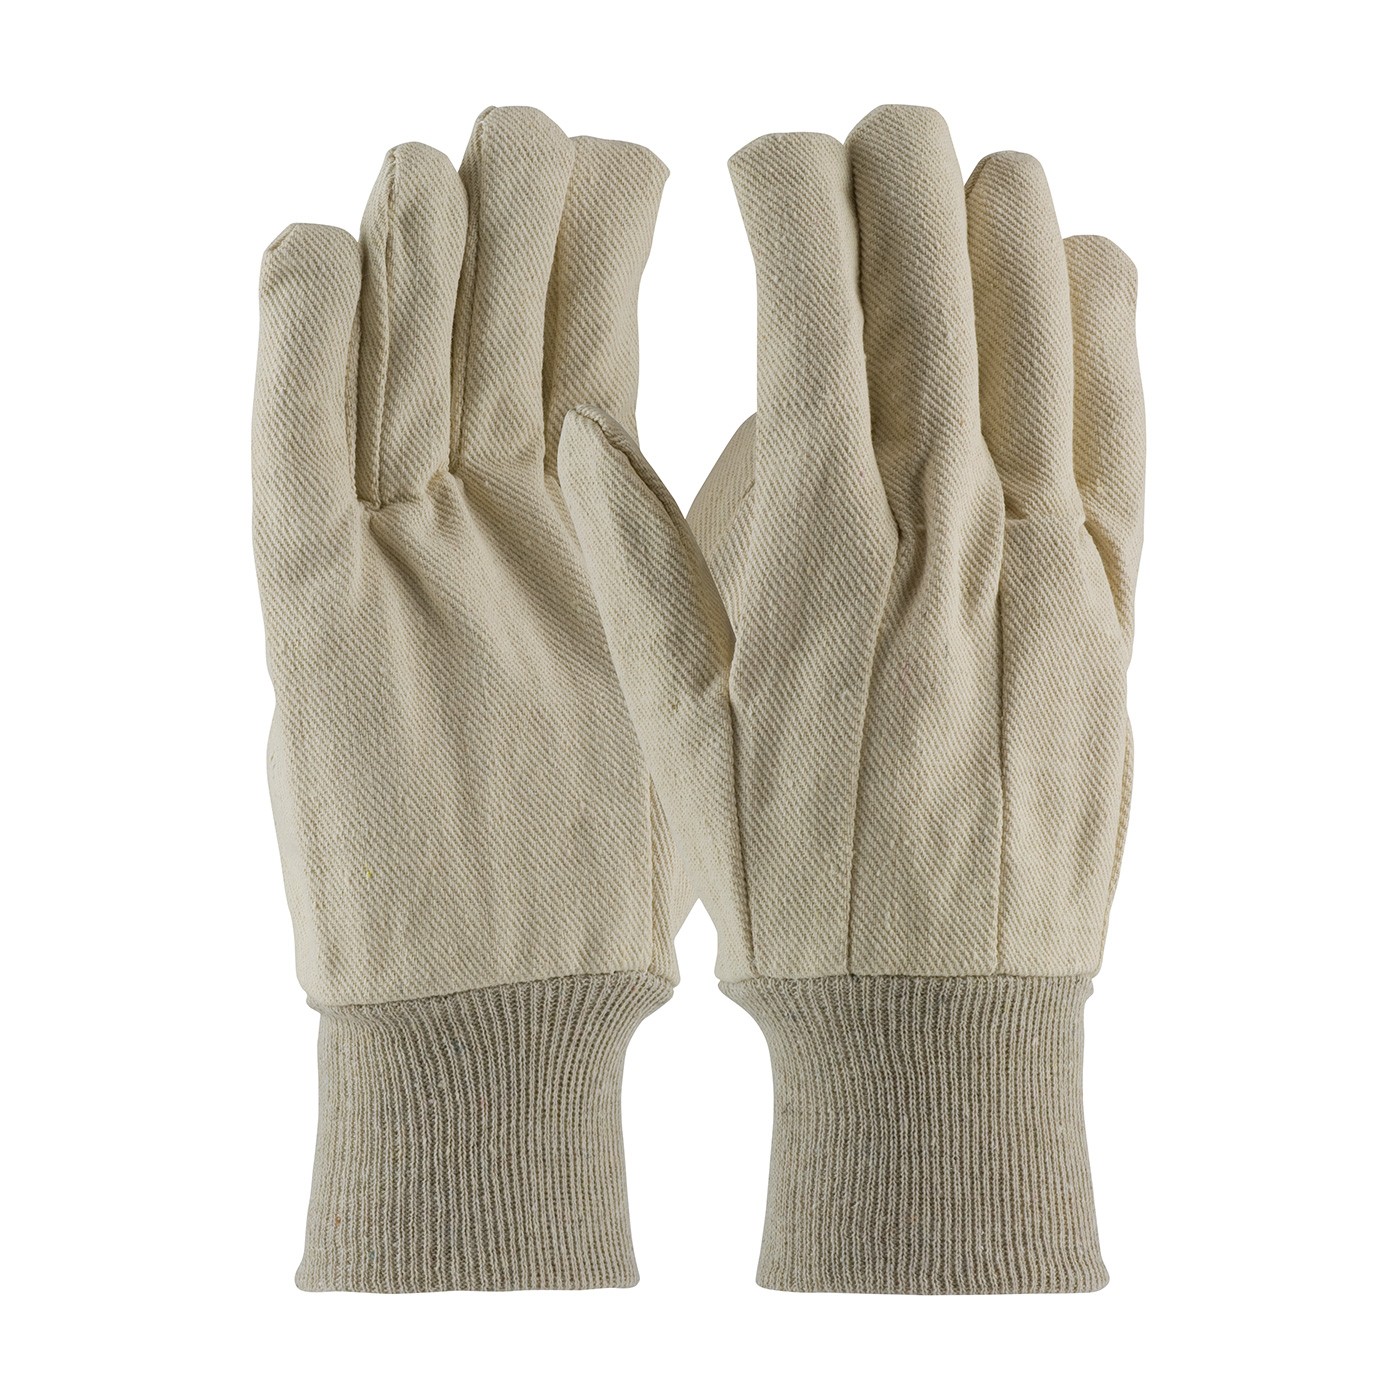 PIP® Premium Grade Cotton Canvas Single Palm Glove - Knitwrist  (#90-910)